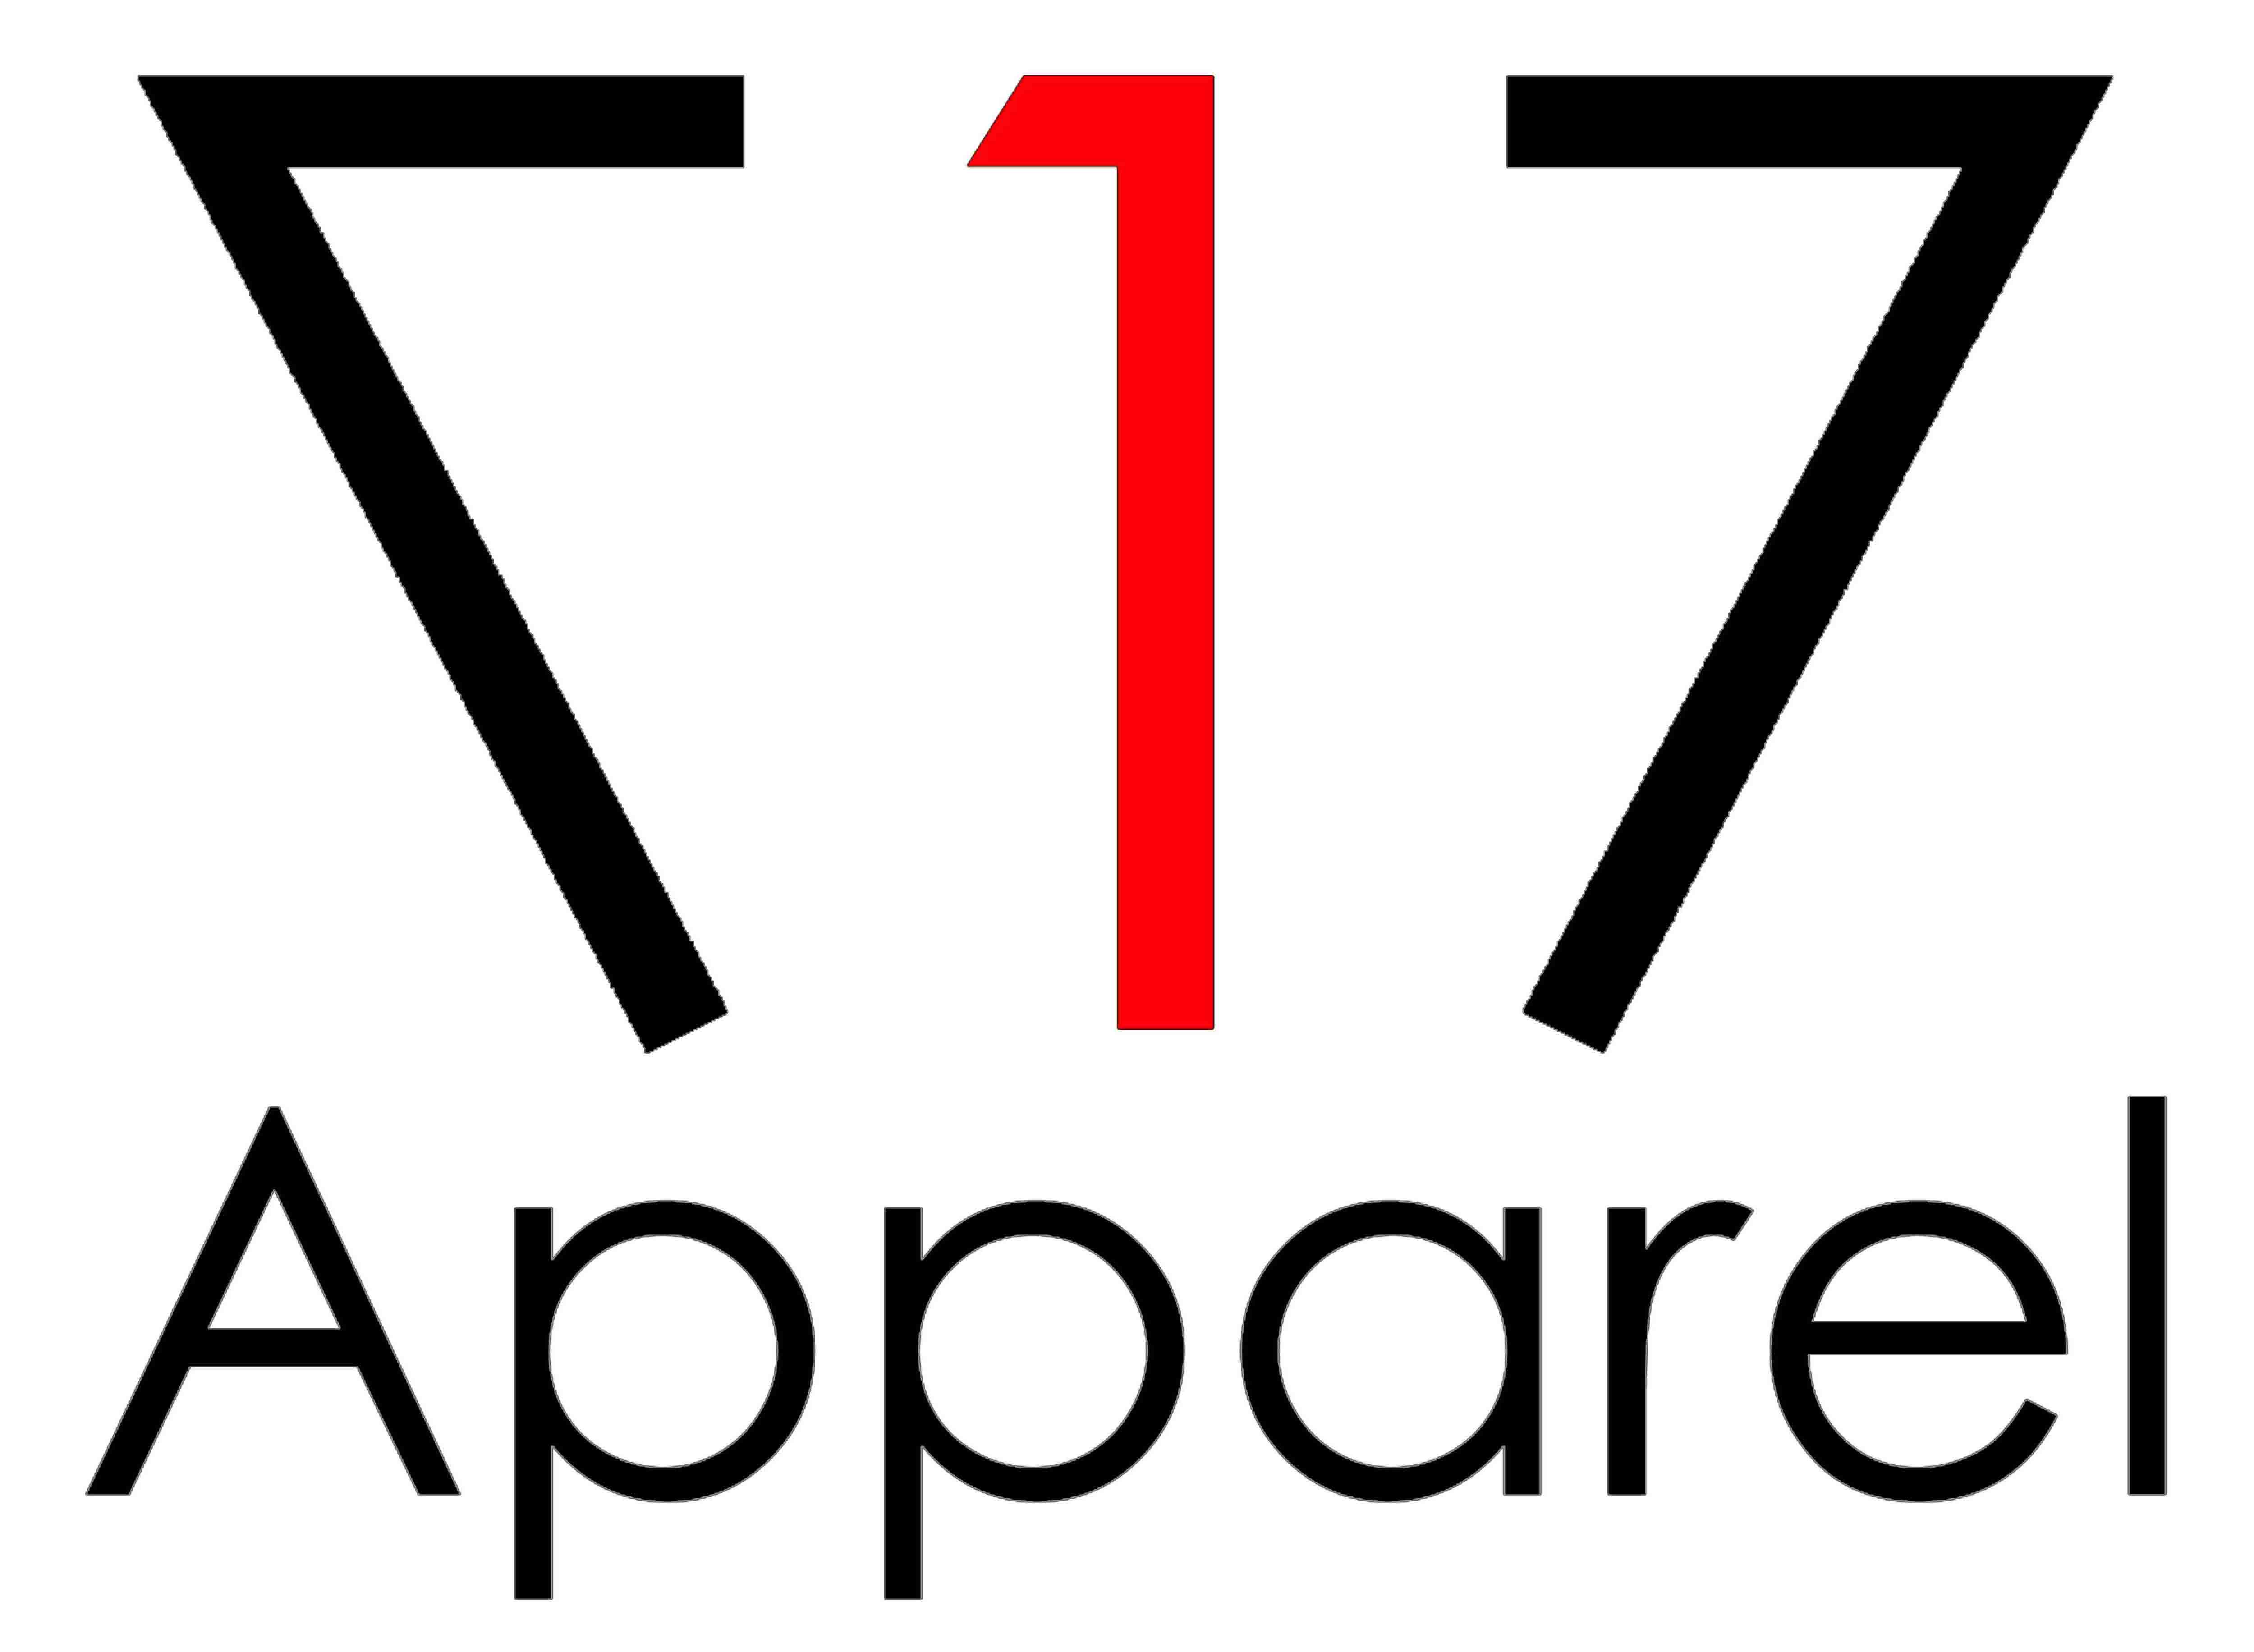 717 Apparel